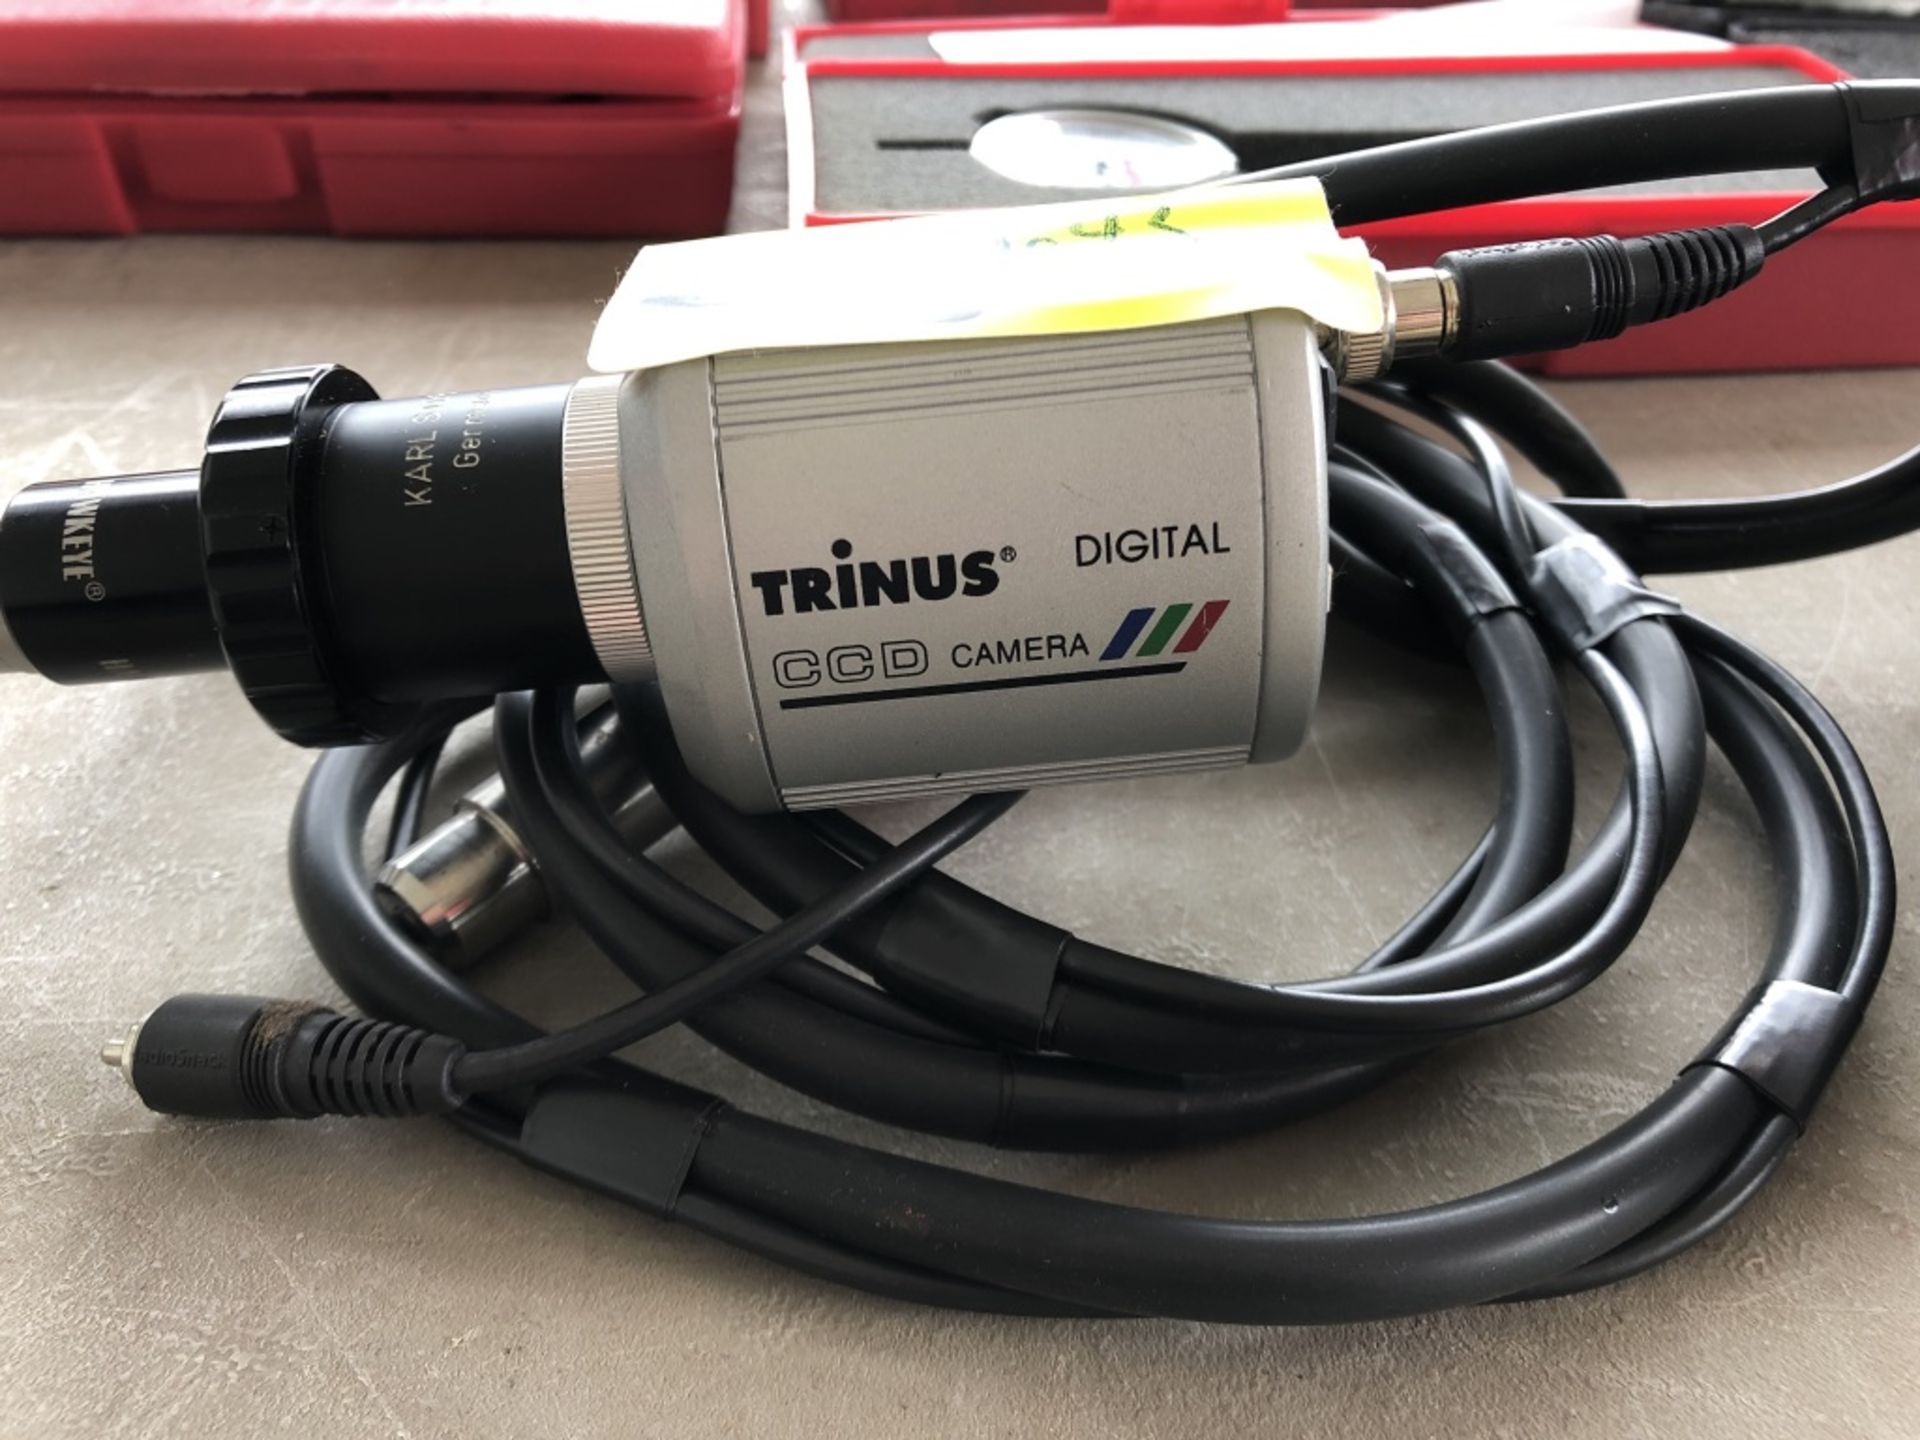 Trinus automotive inspection CCD Digital Camera - Image 2 of 3